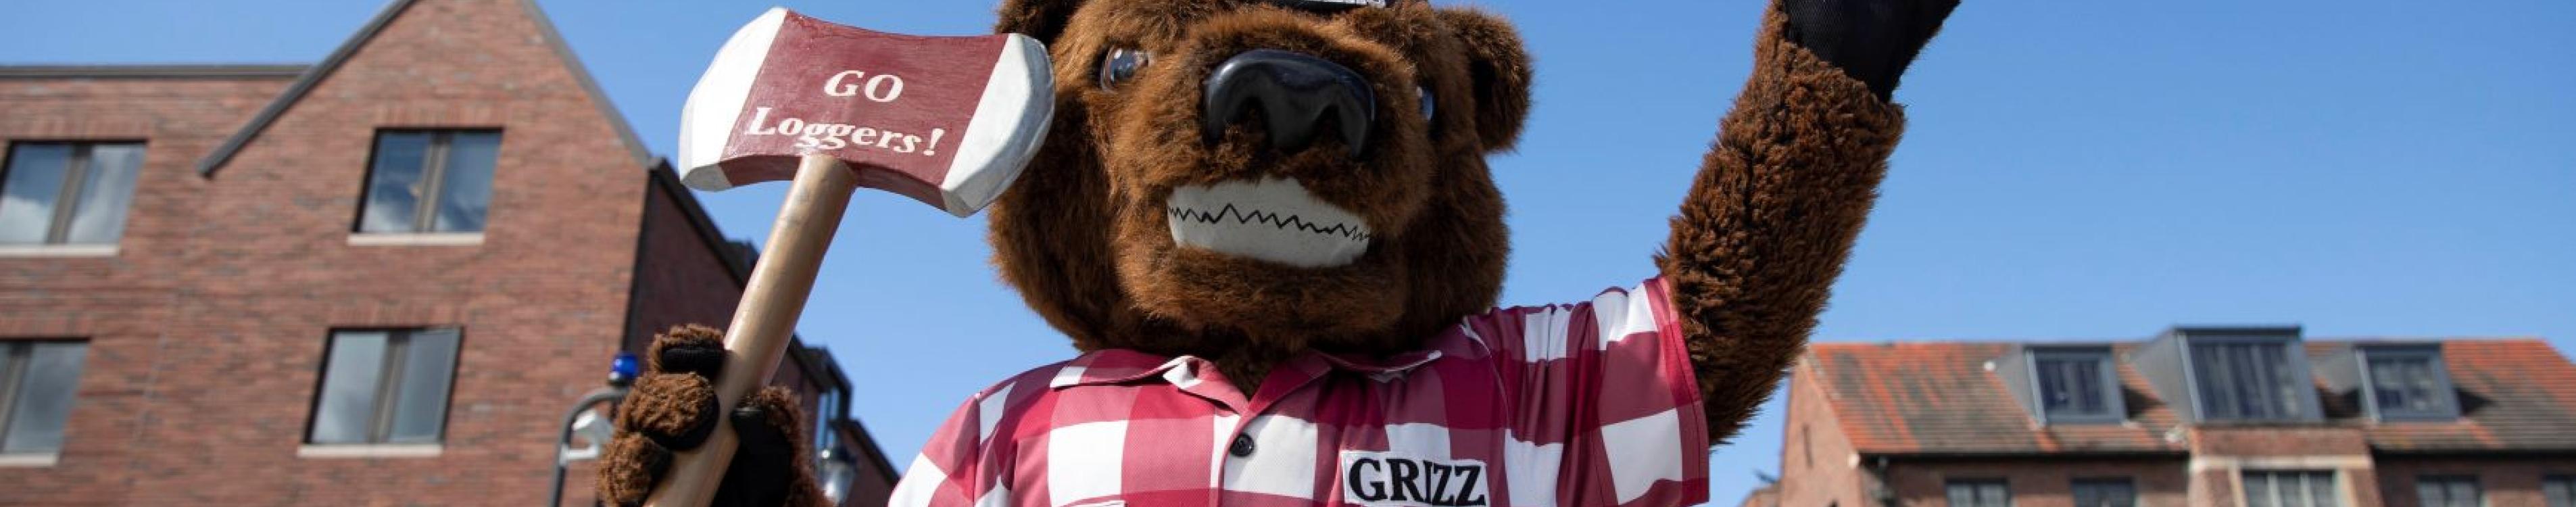 University mascot Grizz the bear